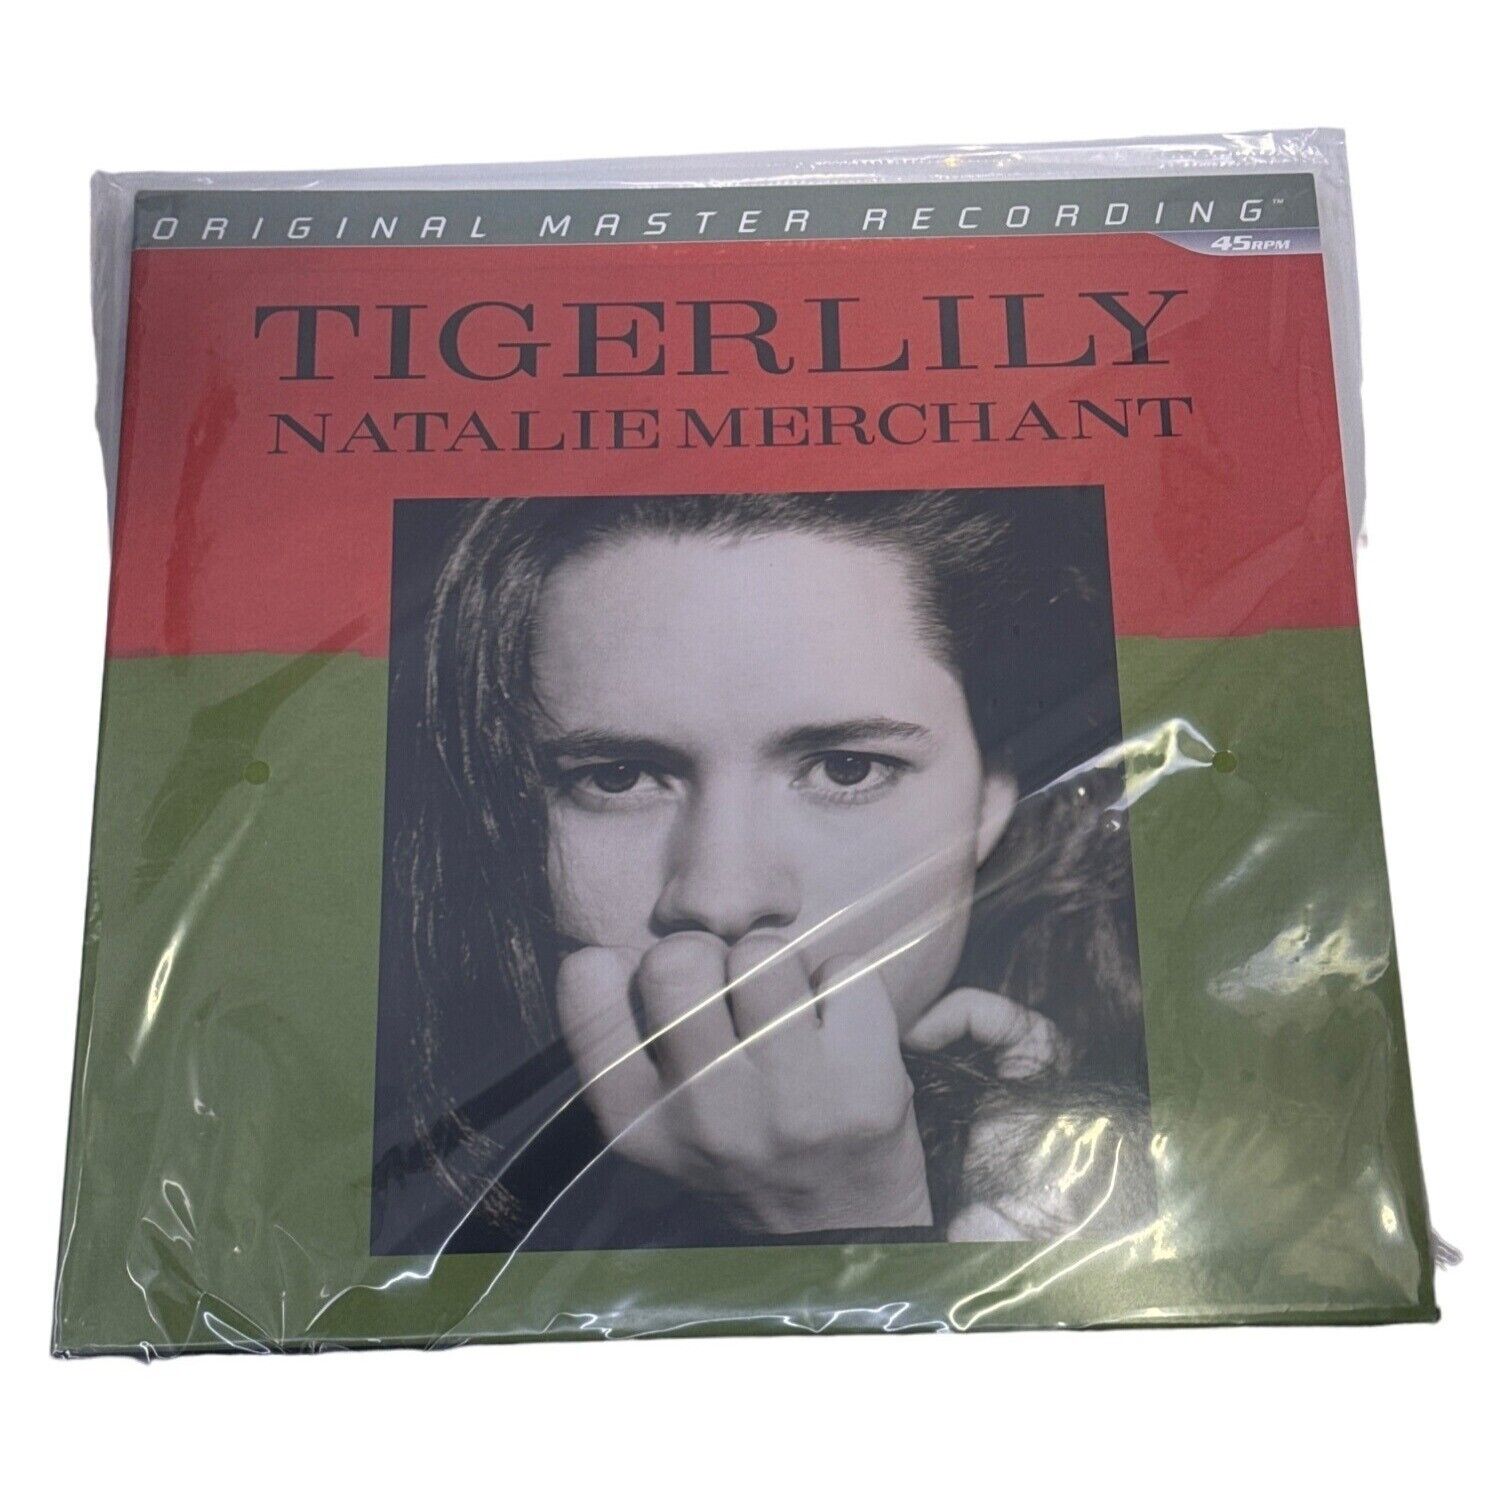 Natalie Merchant Tigerlily 45 RPM MoFi MFSL 2-45008 New Sealed